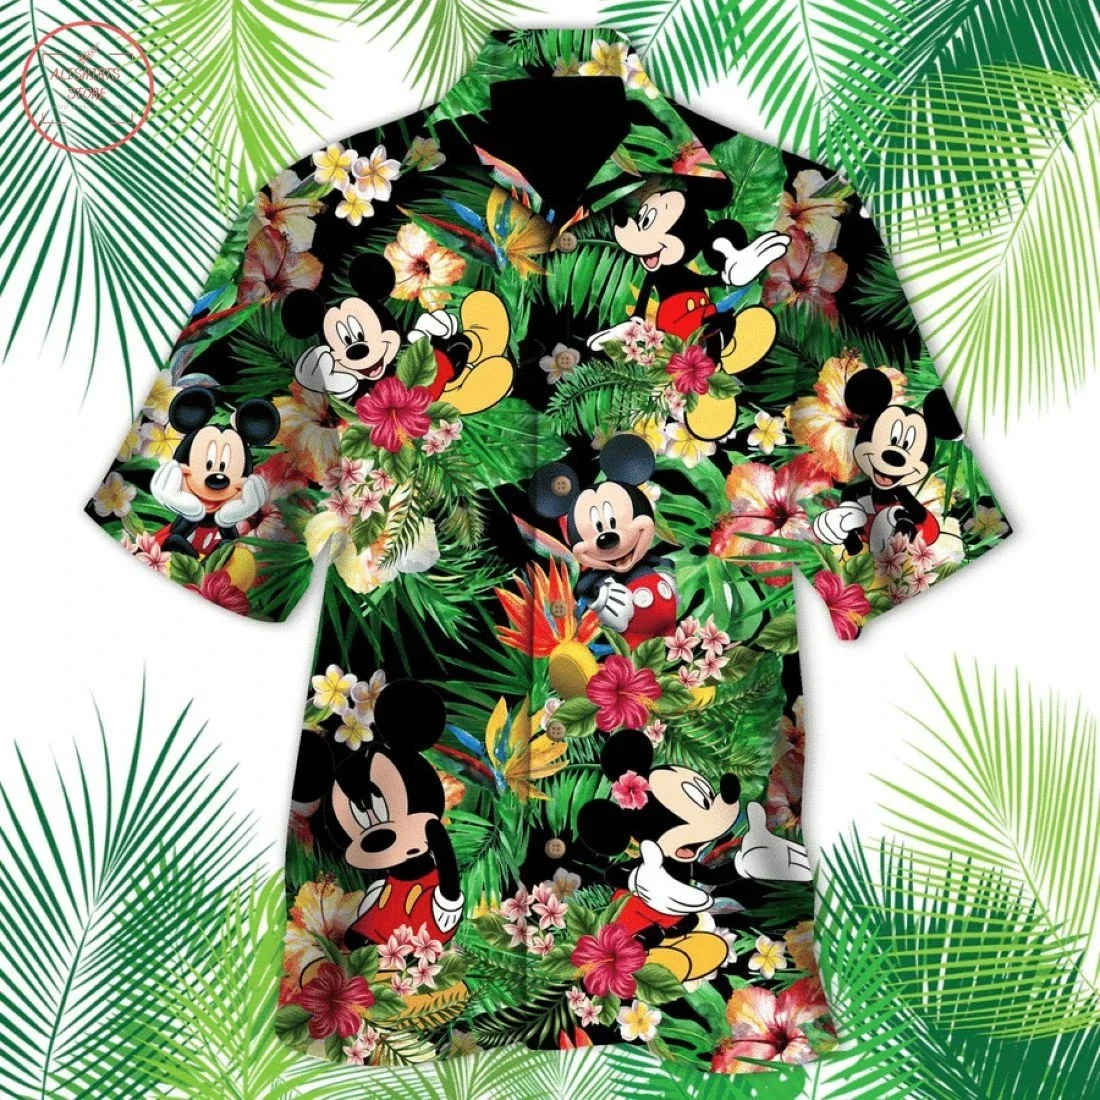 

Гавайская рубашка с короткими рукавами, Повседневная пляжная гавайская рубашка для отпуска с изображением Микки Мауса, в стиле ретро, 20244